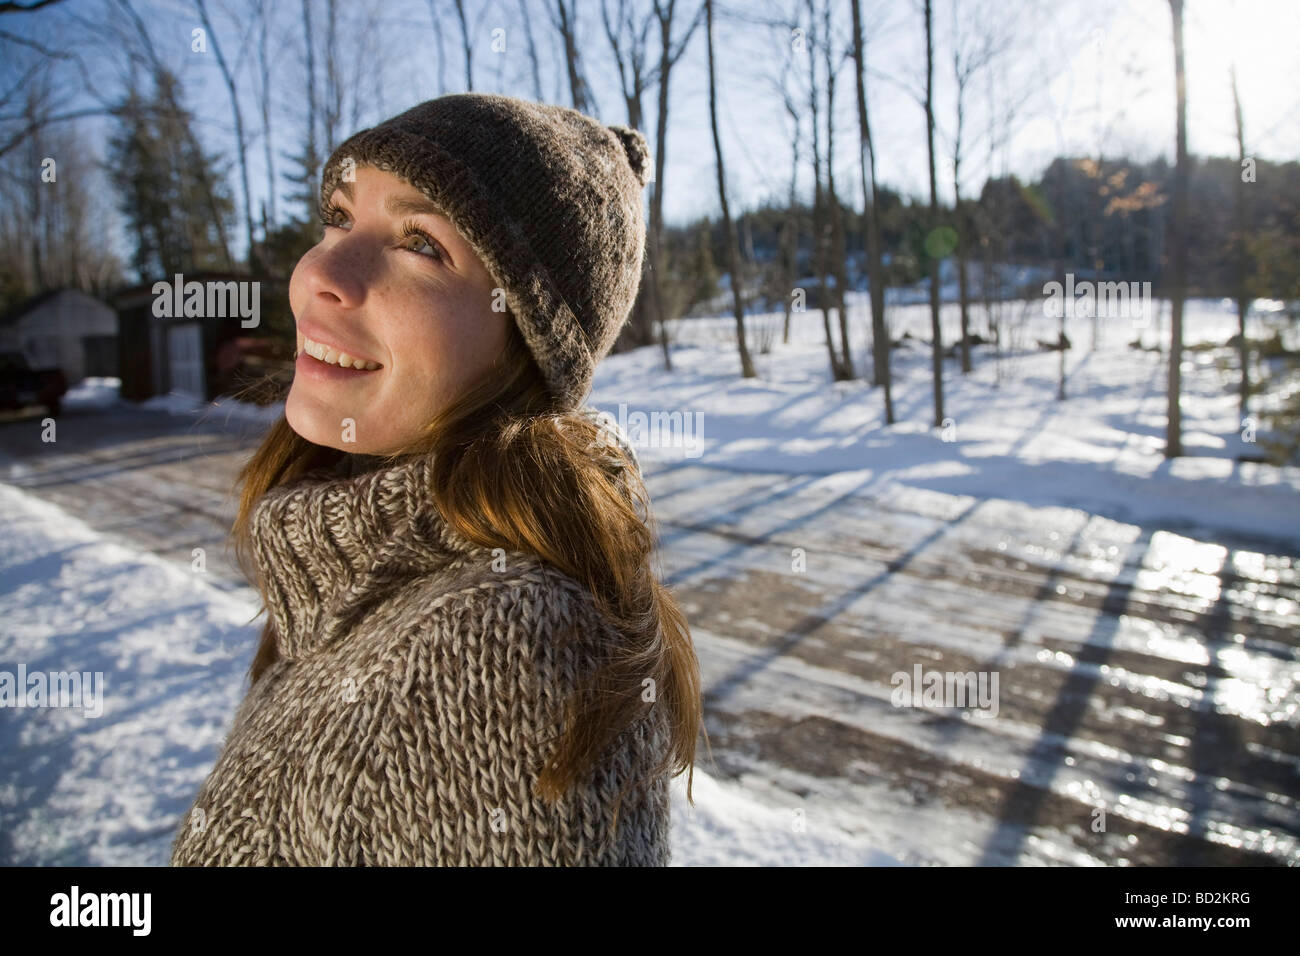 Thoughtful Woman in Winter Scene Stock Photo